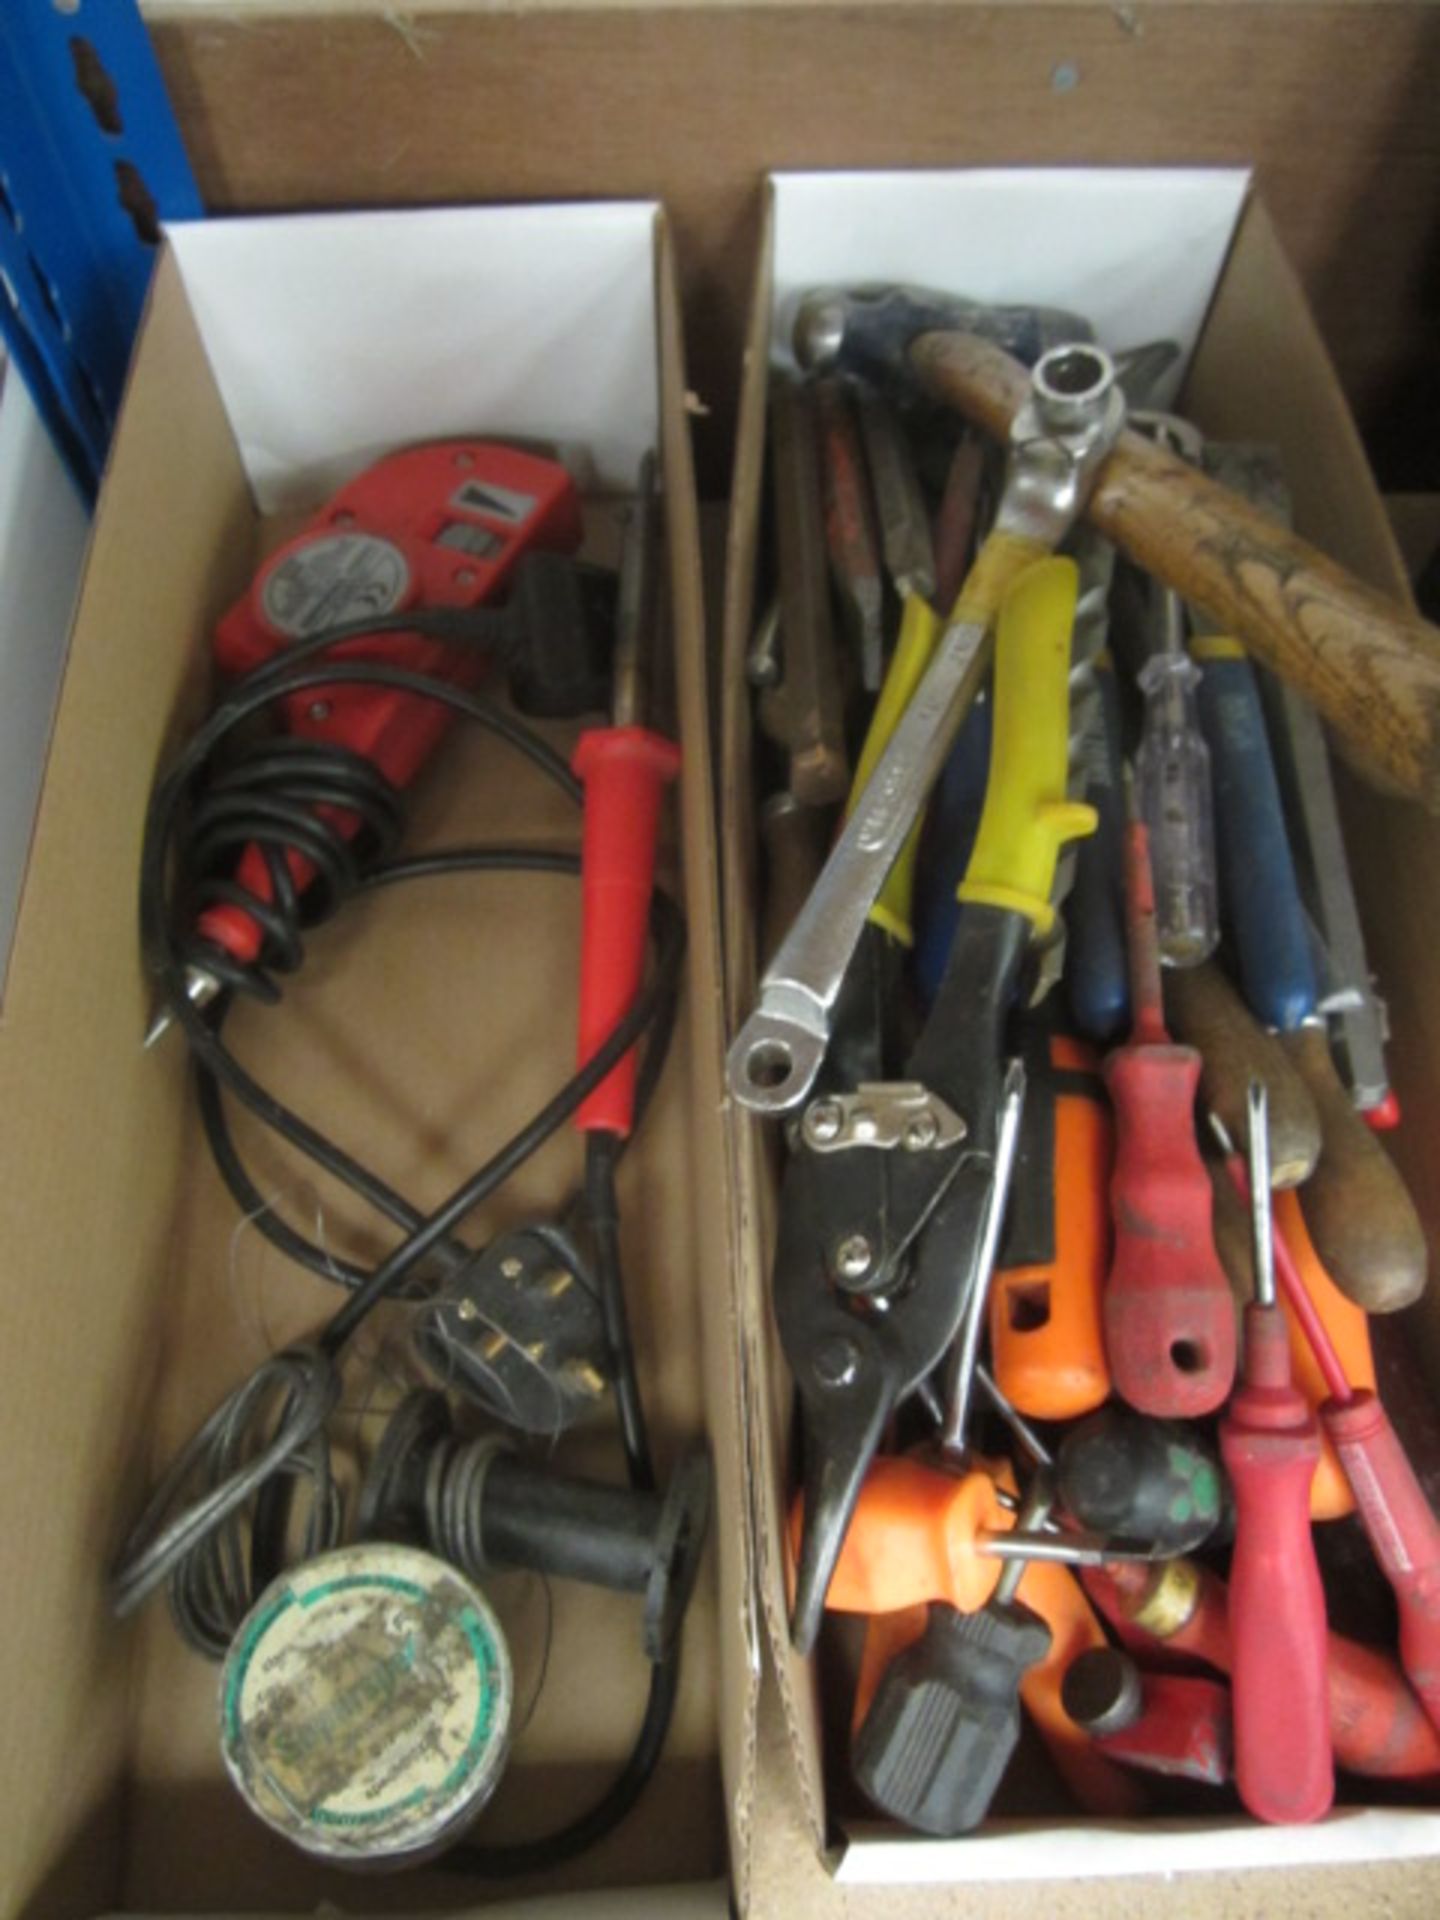 Quantity of assorted hand tools including allen keys, screwdrivers, socket sets, solder iron, - Image 3 of 3